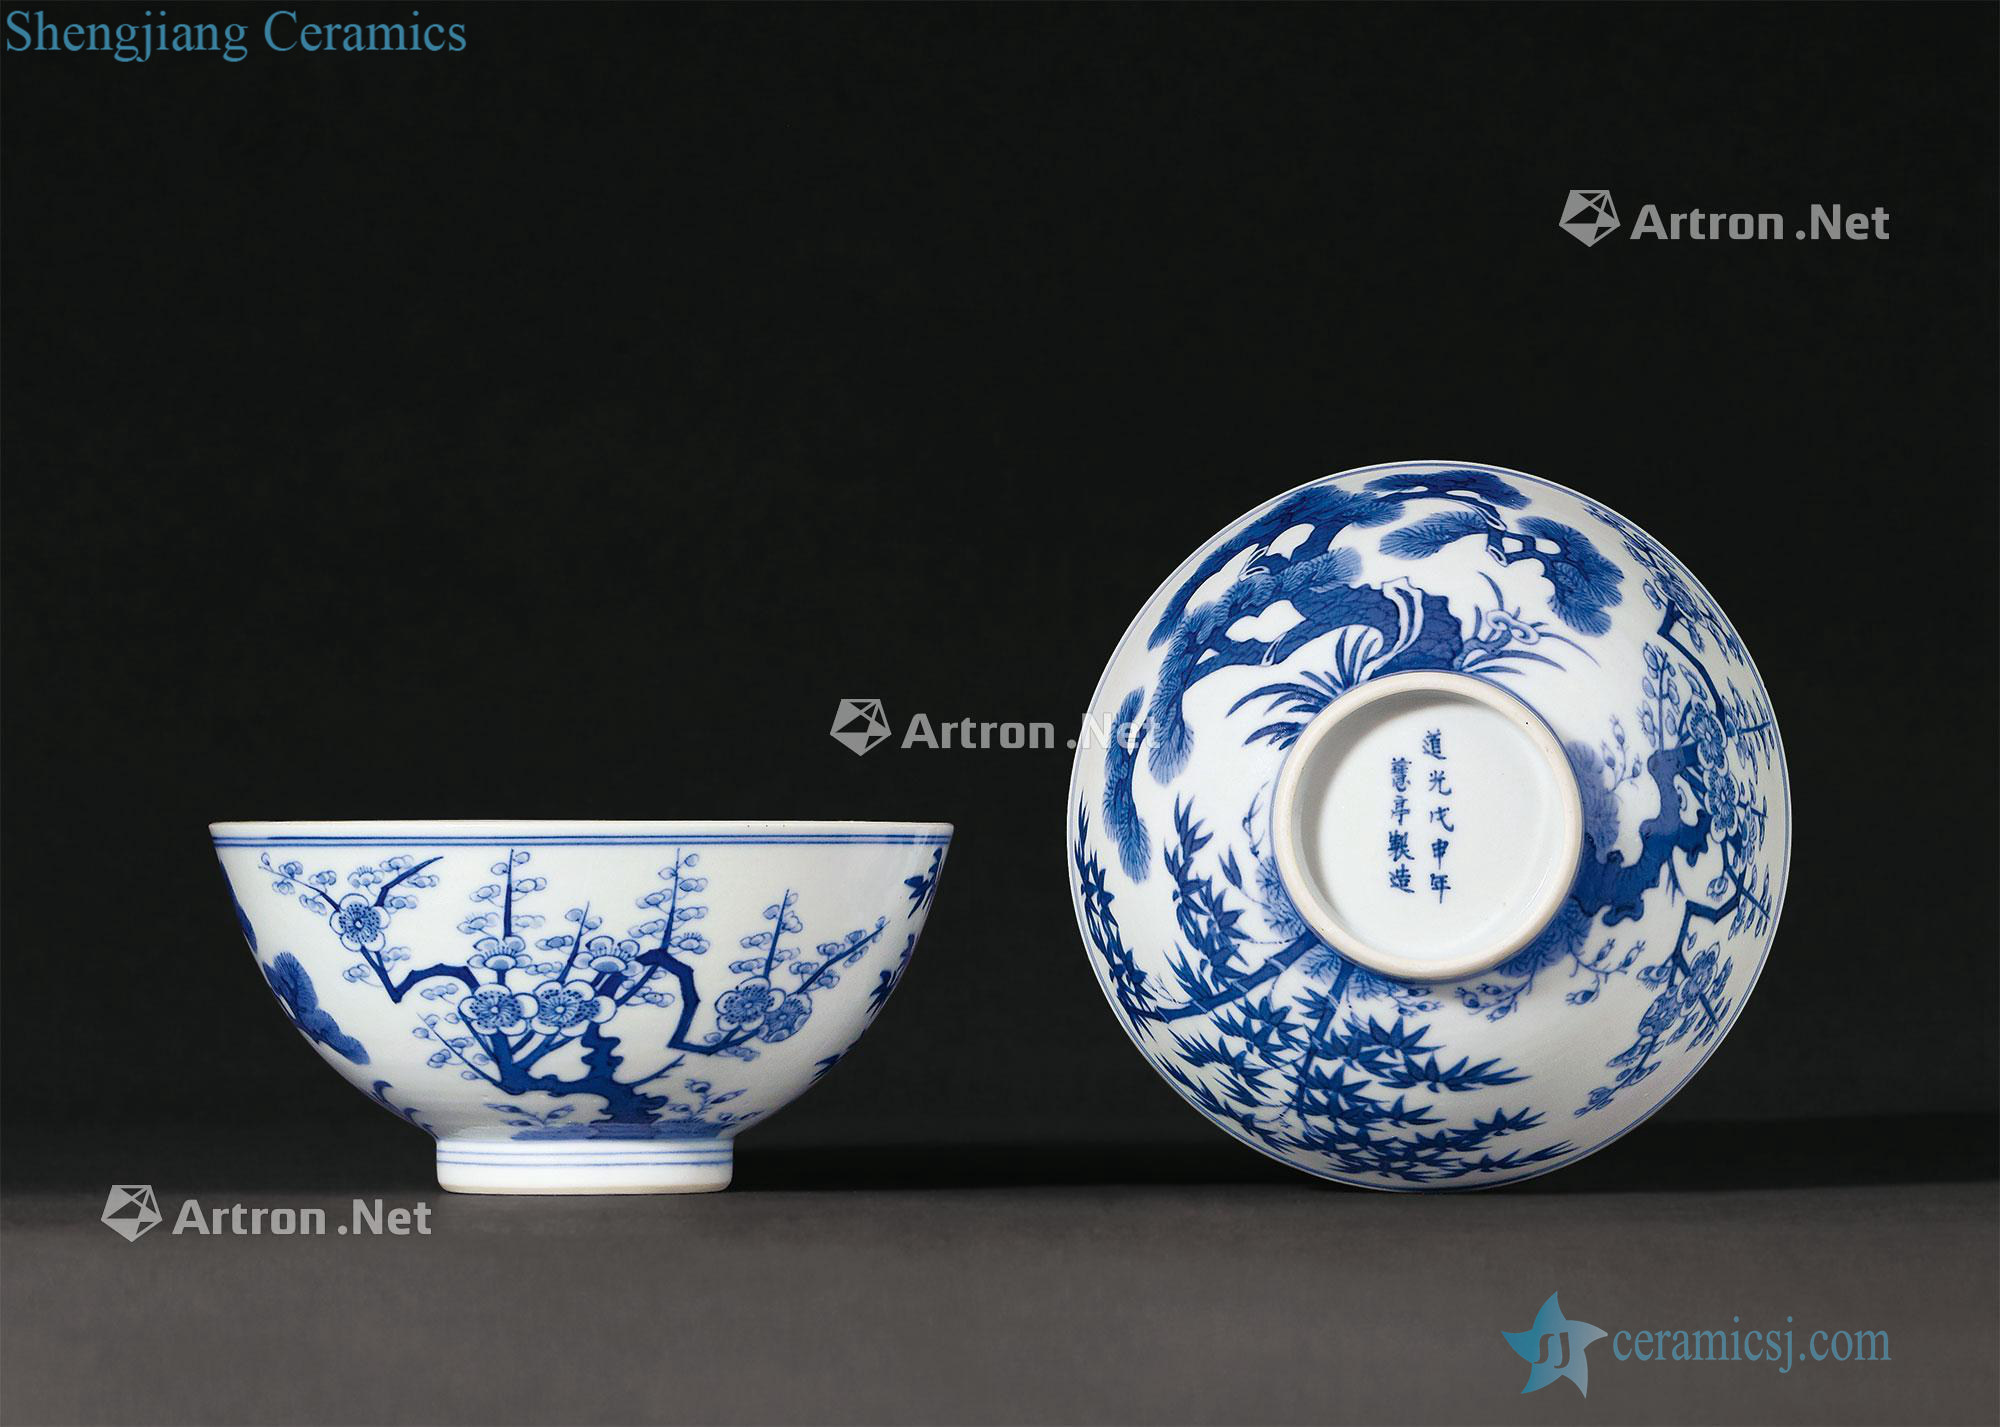 Qing daoguang e "(1848), poetic figure bowl (a)